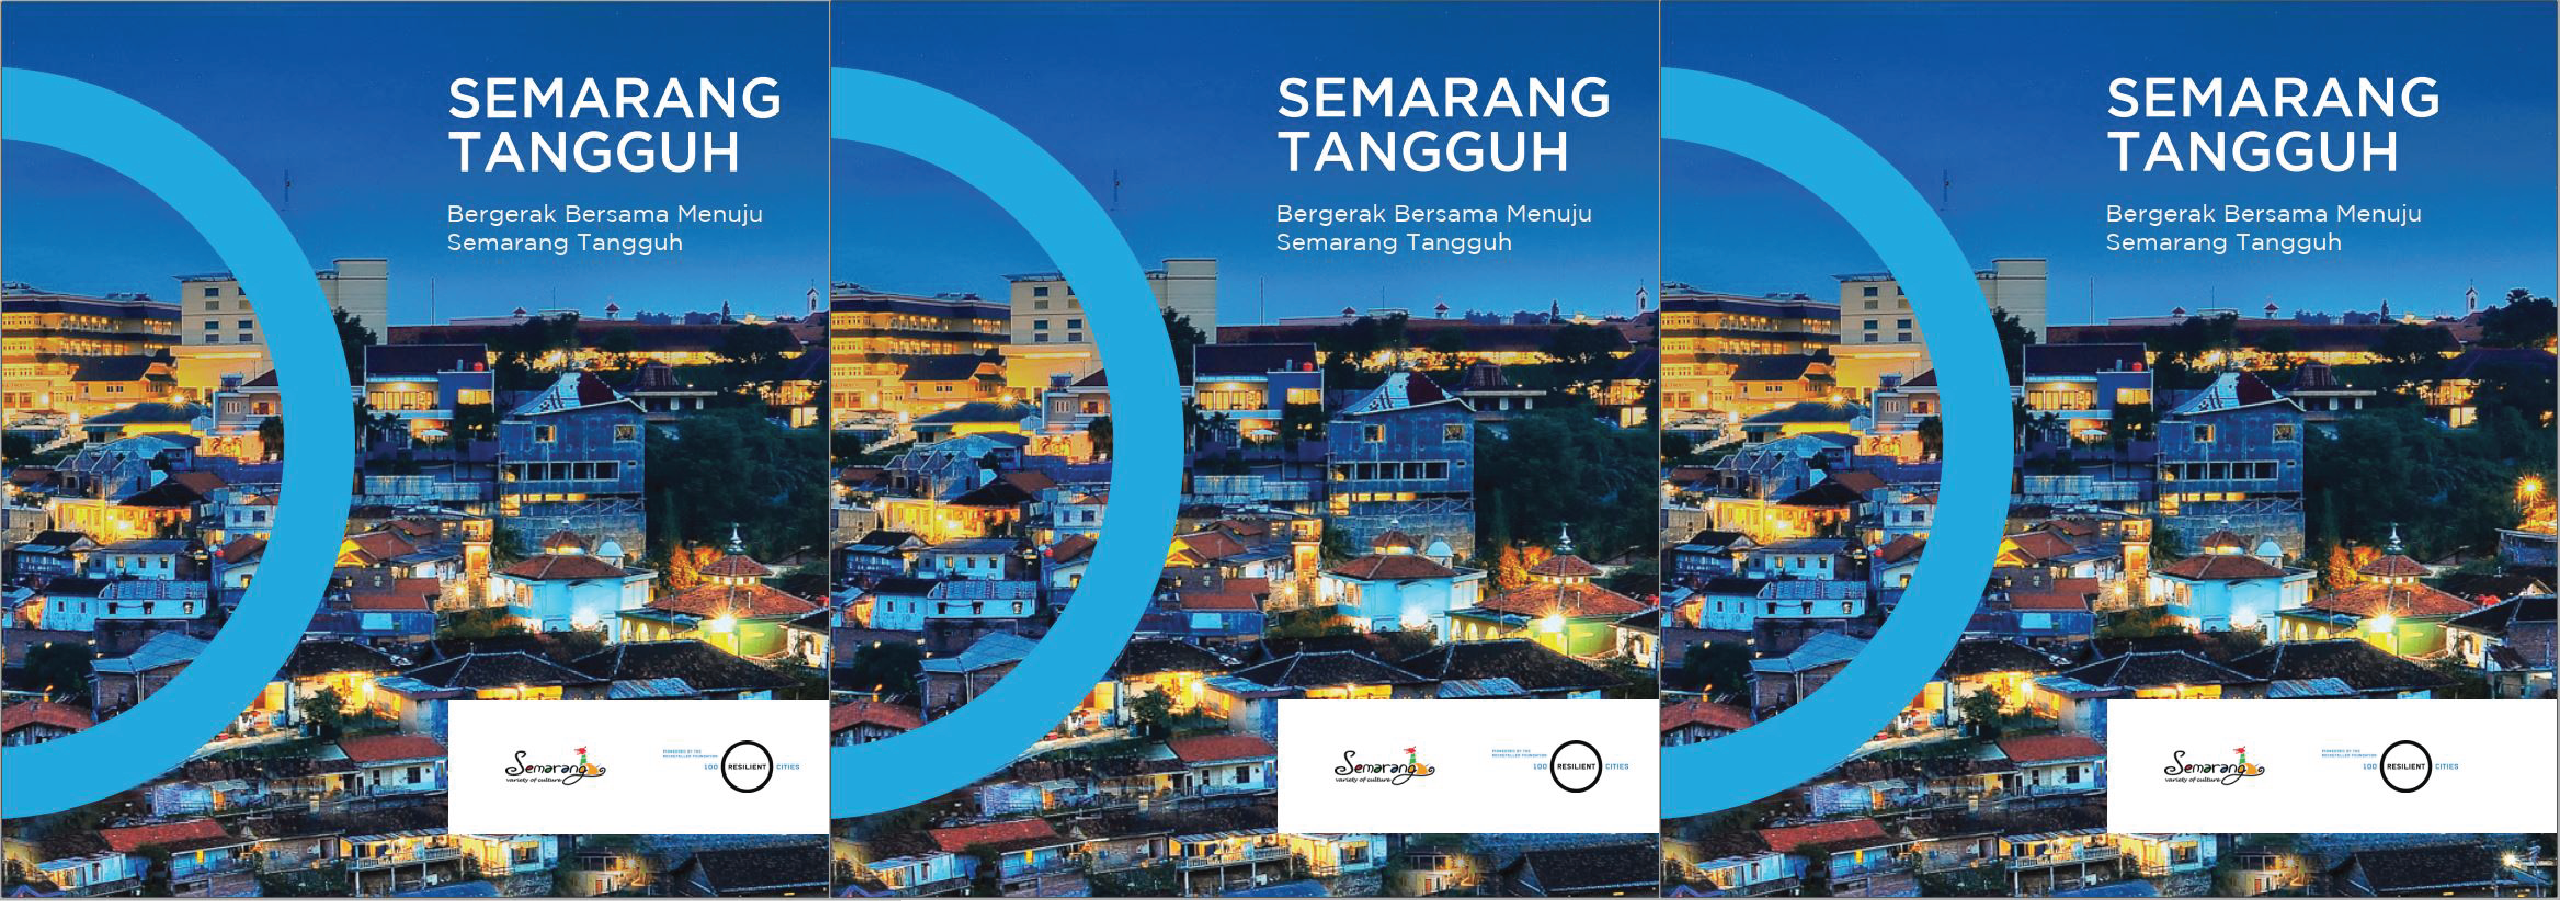 Semarang Luncurkan Strategi Ketahanan Kota, “Bergerak Bersama Menuju Semarang Tangguh”